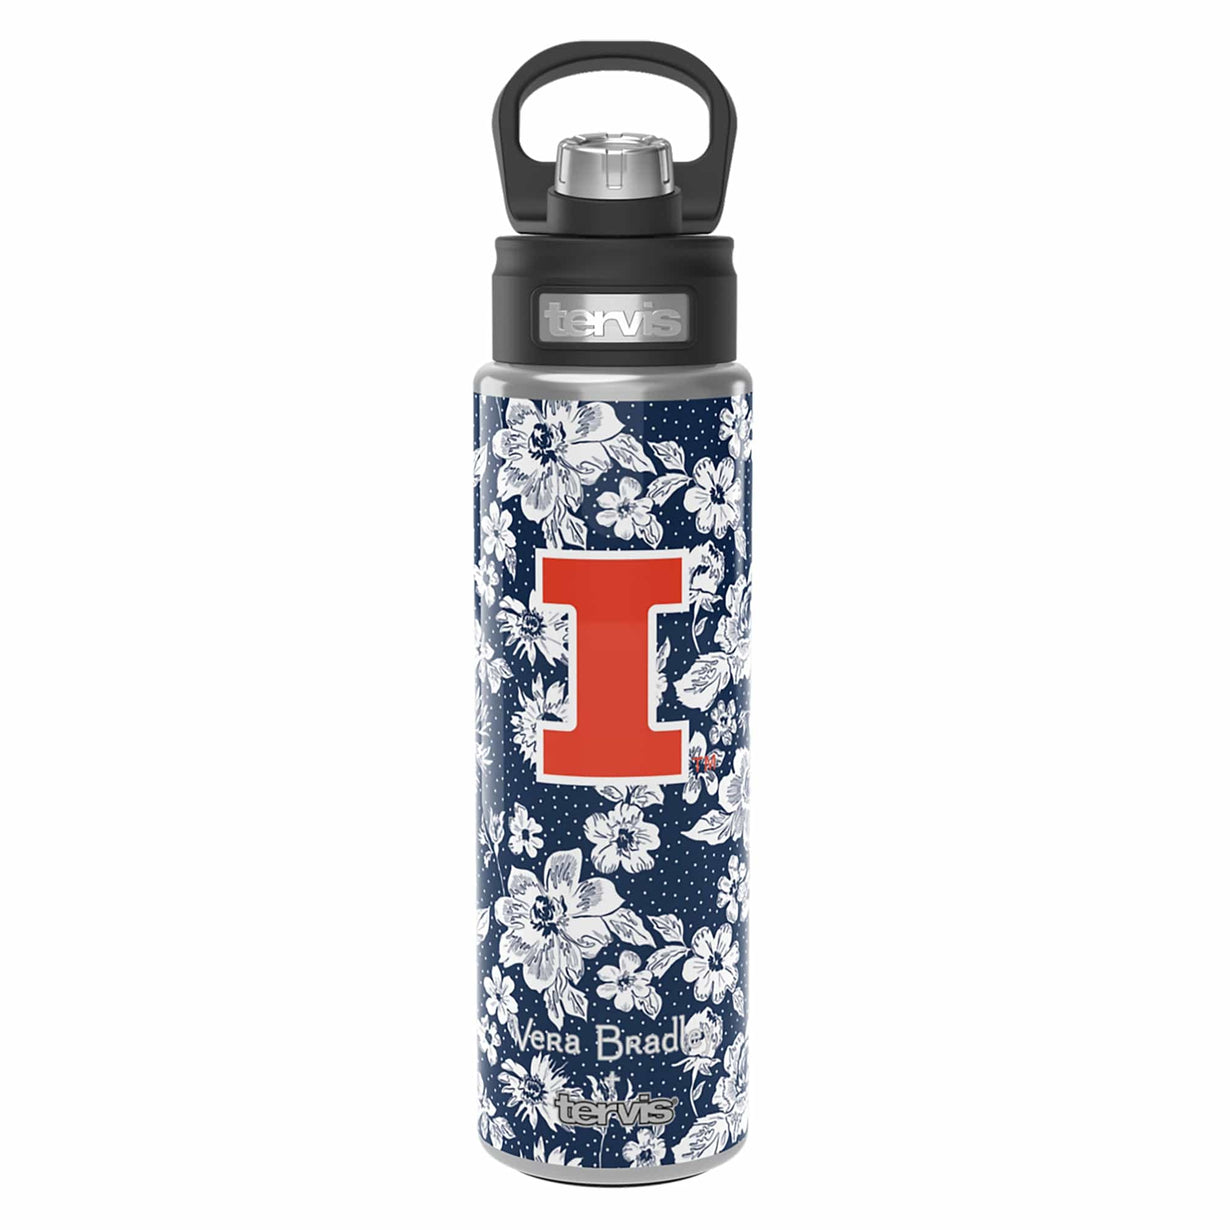 Tervis water bottle with University of Illinois logo